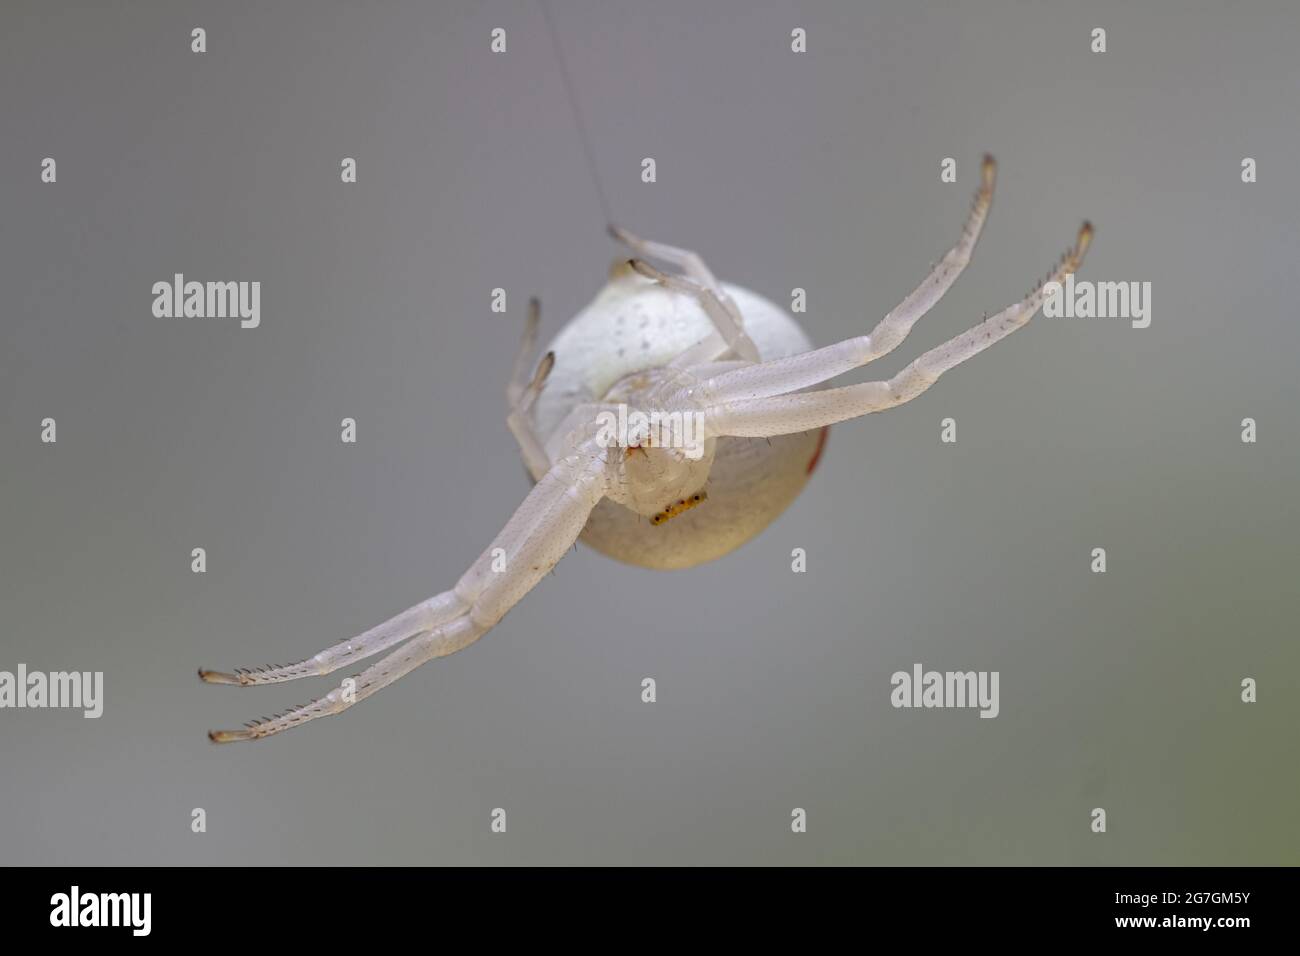 Closeup of Arniella Cucurbitina spider hanging on thin cobweb in nature against blurred gray background Stock Photo